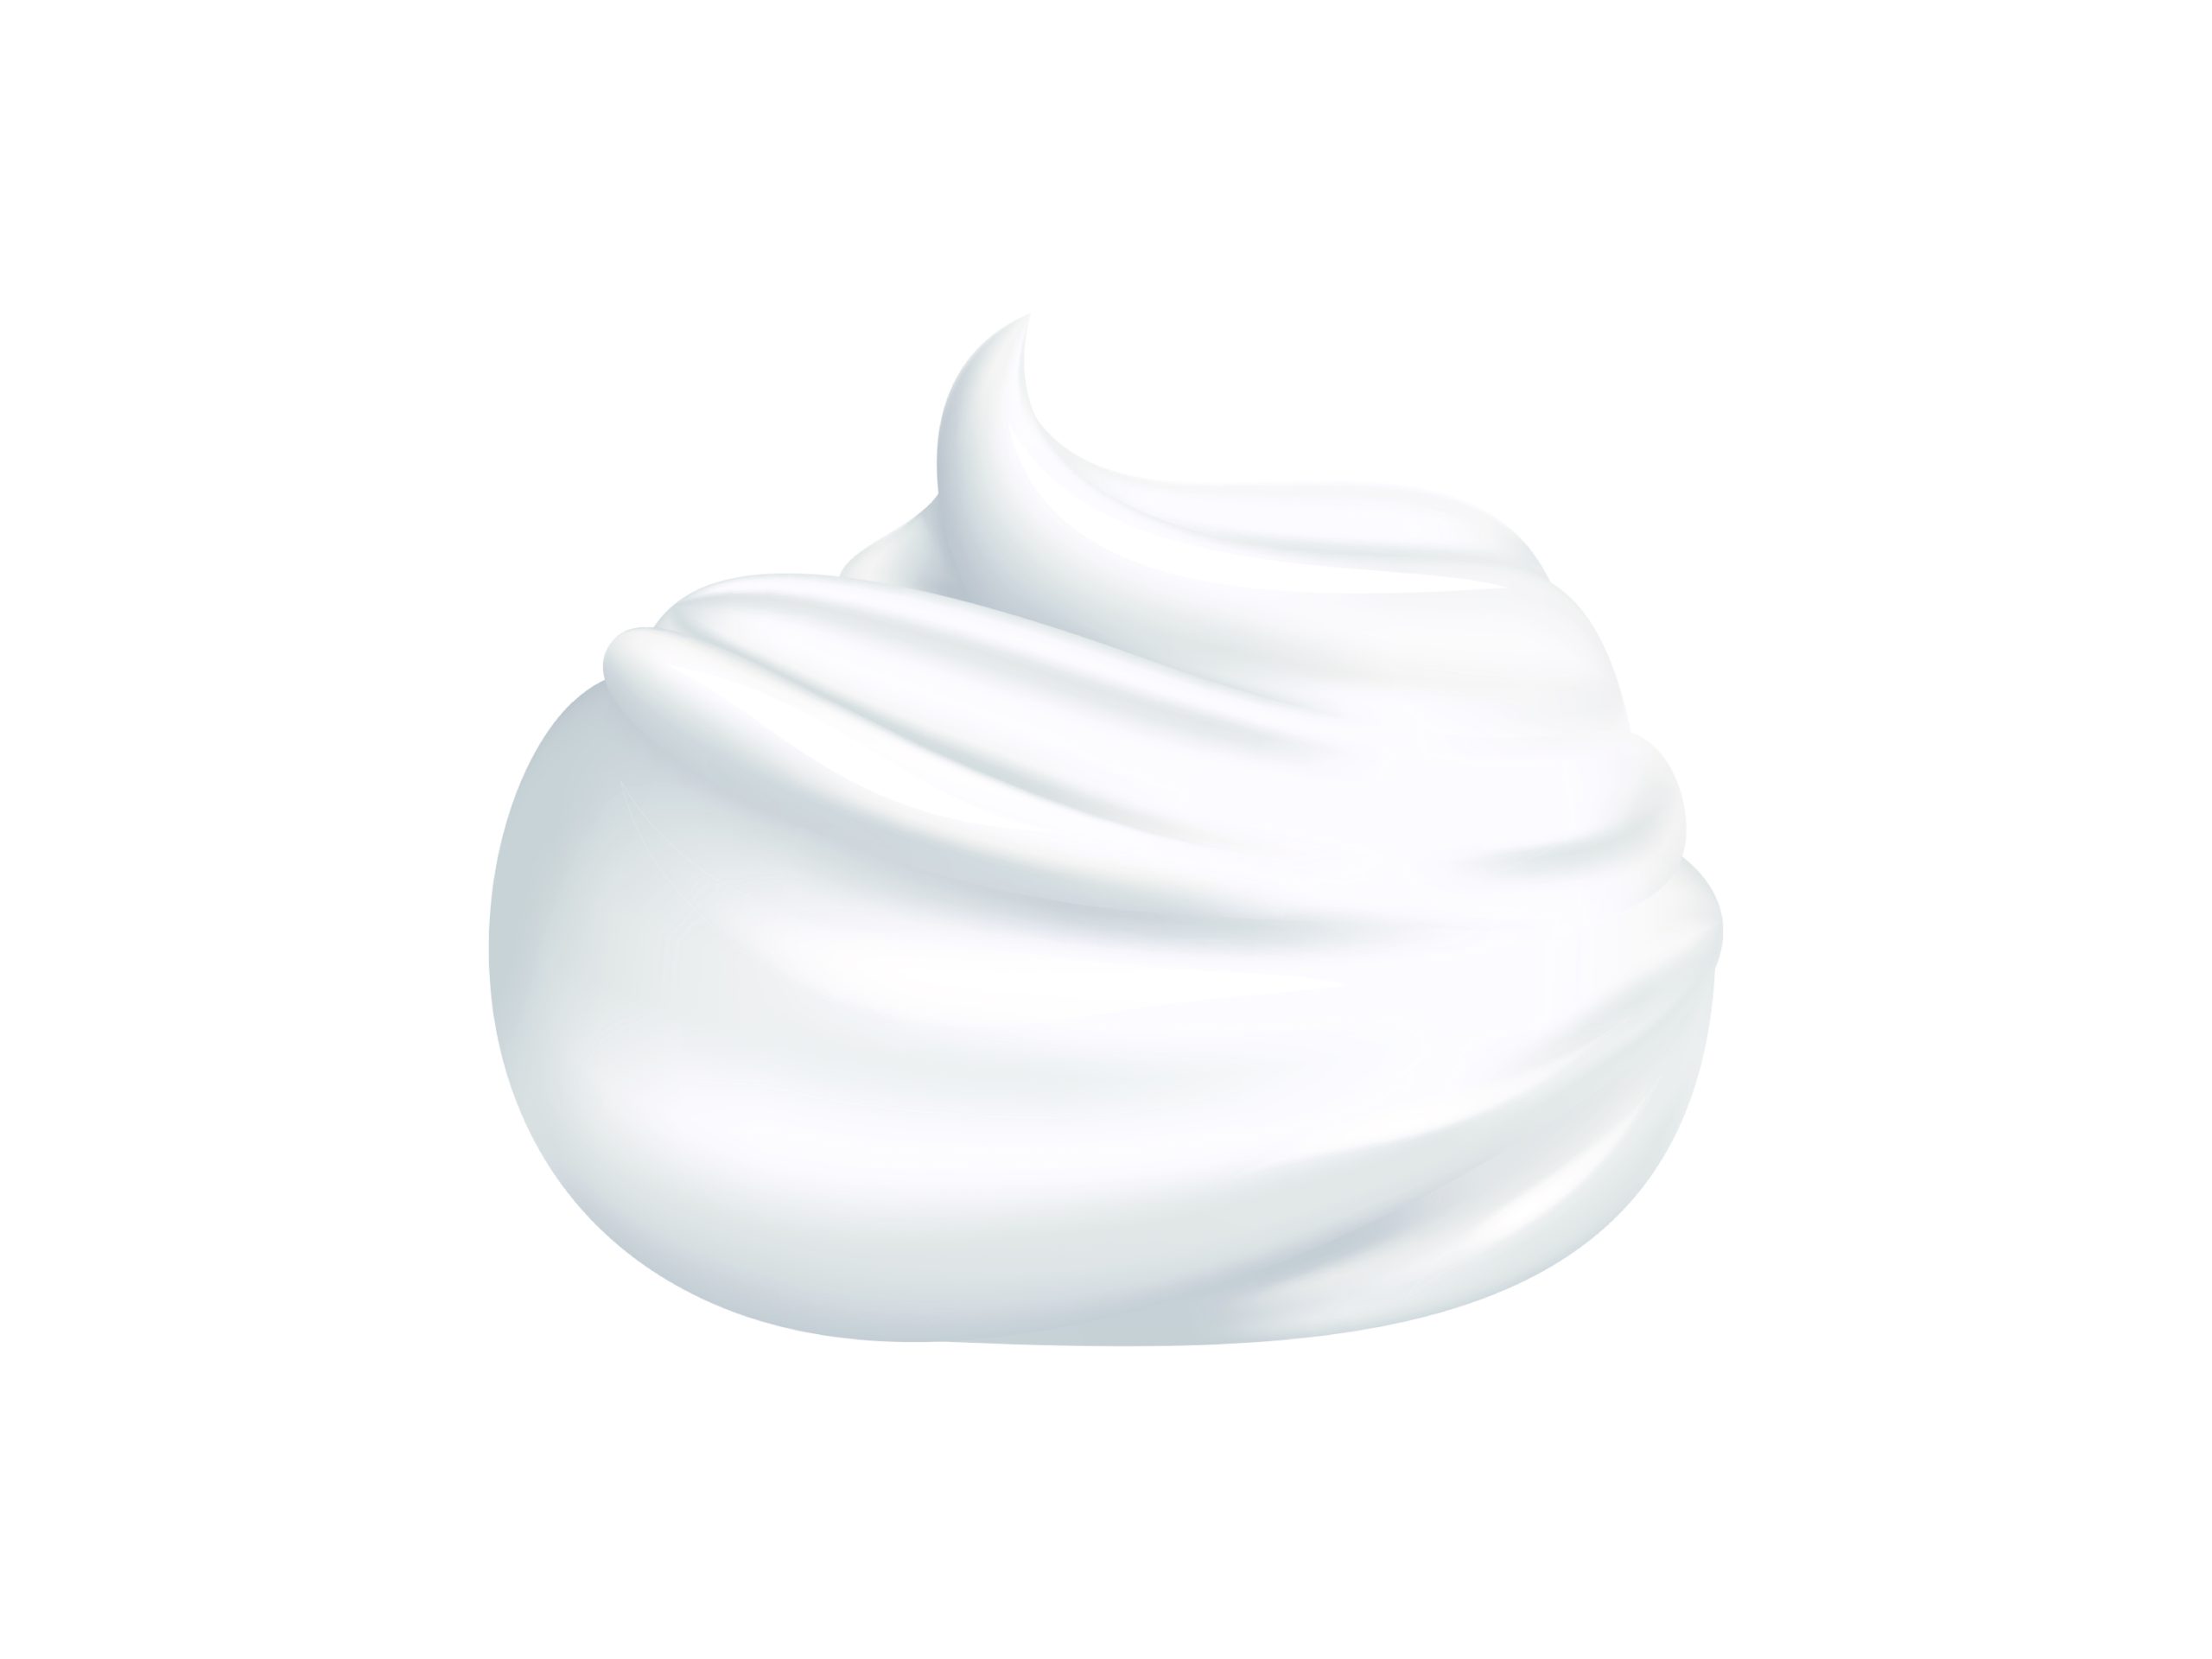 Minoxidil foam on white background